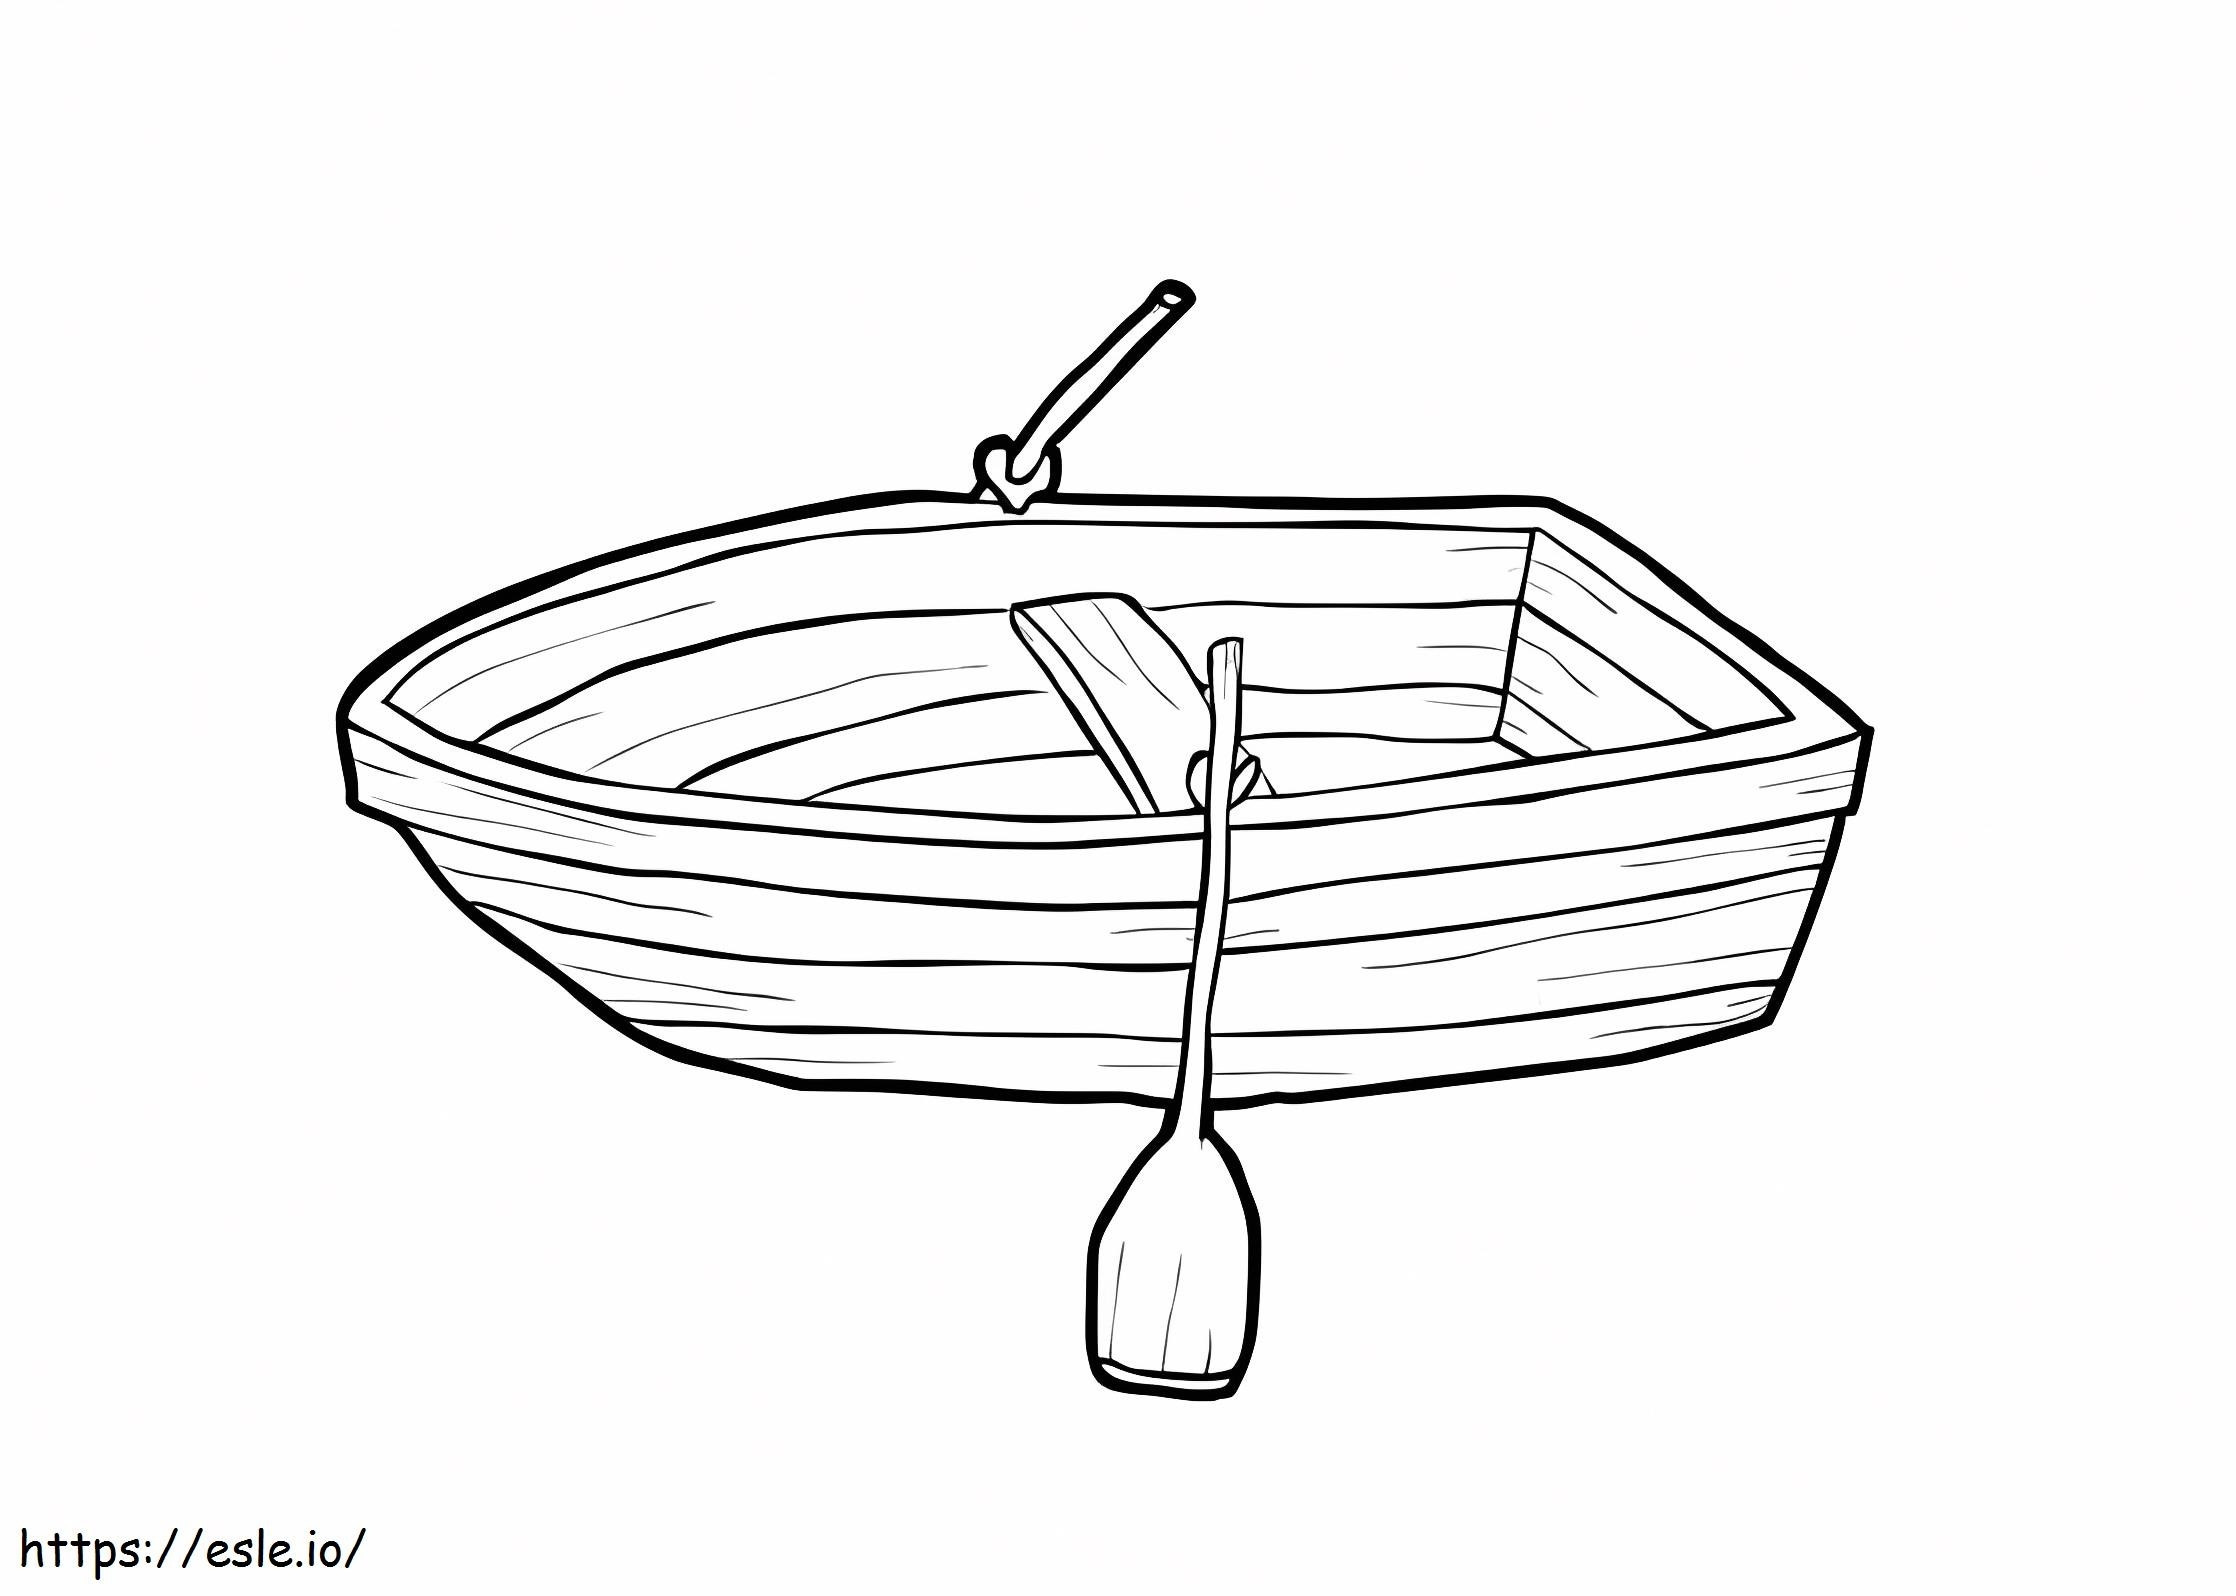 Small Rowboat coloring page